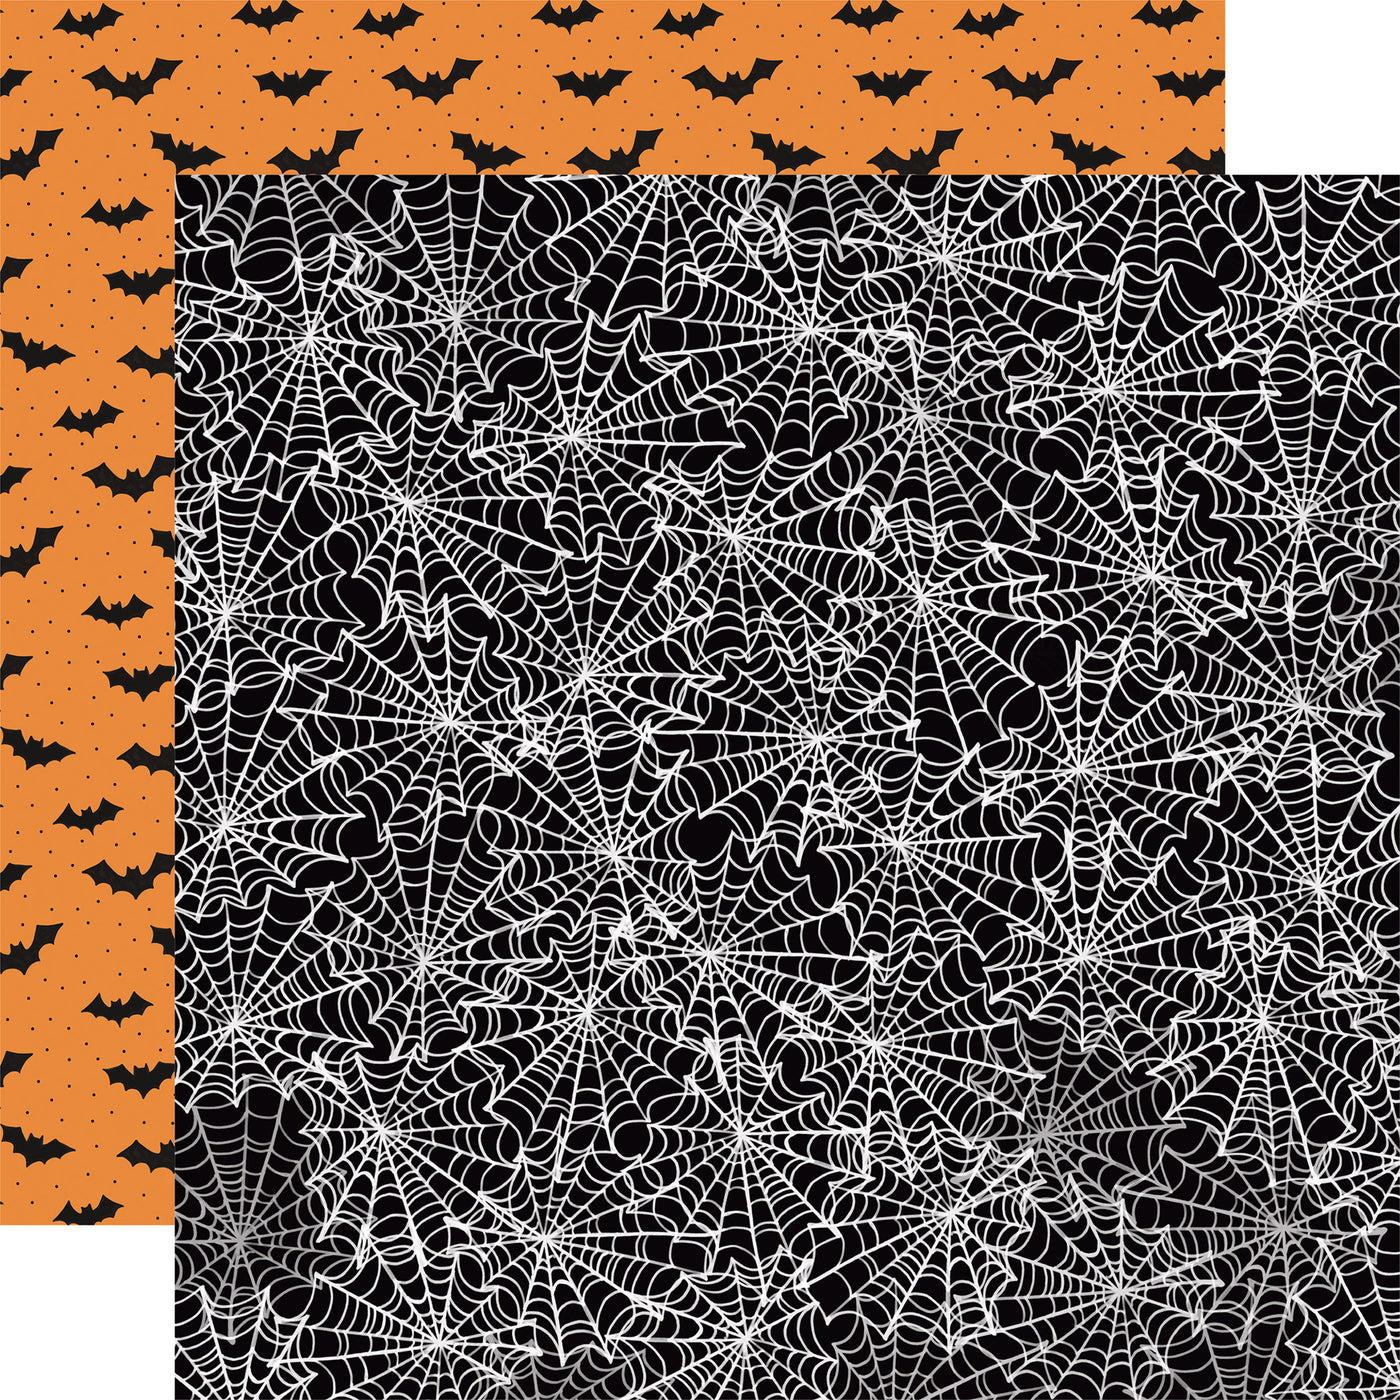 (Side A - spider webs all over on a black background, Side B - flying bats and little black polka dots on an orange background)